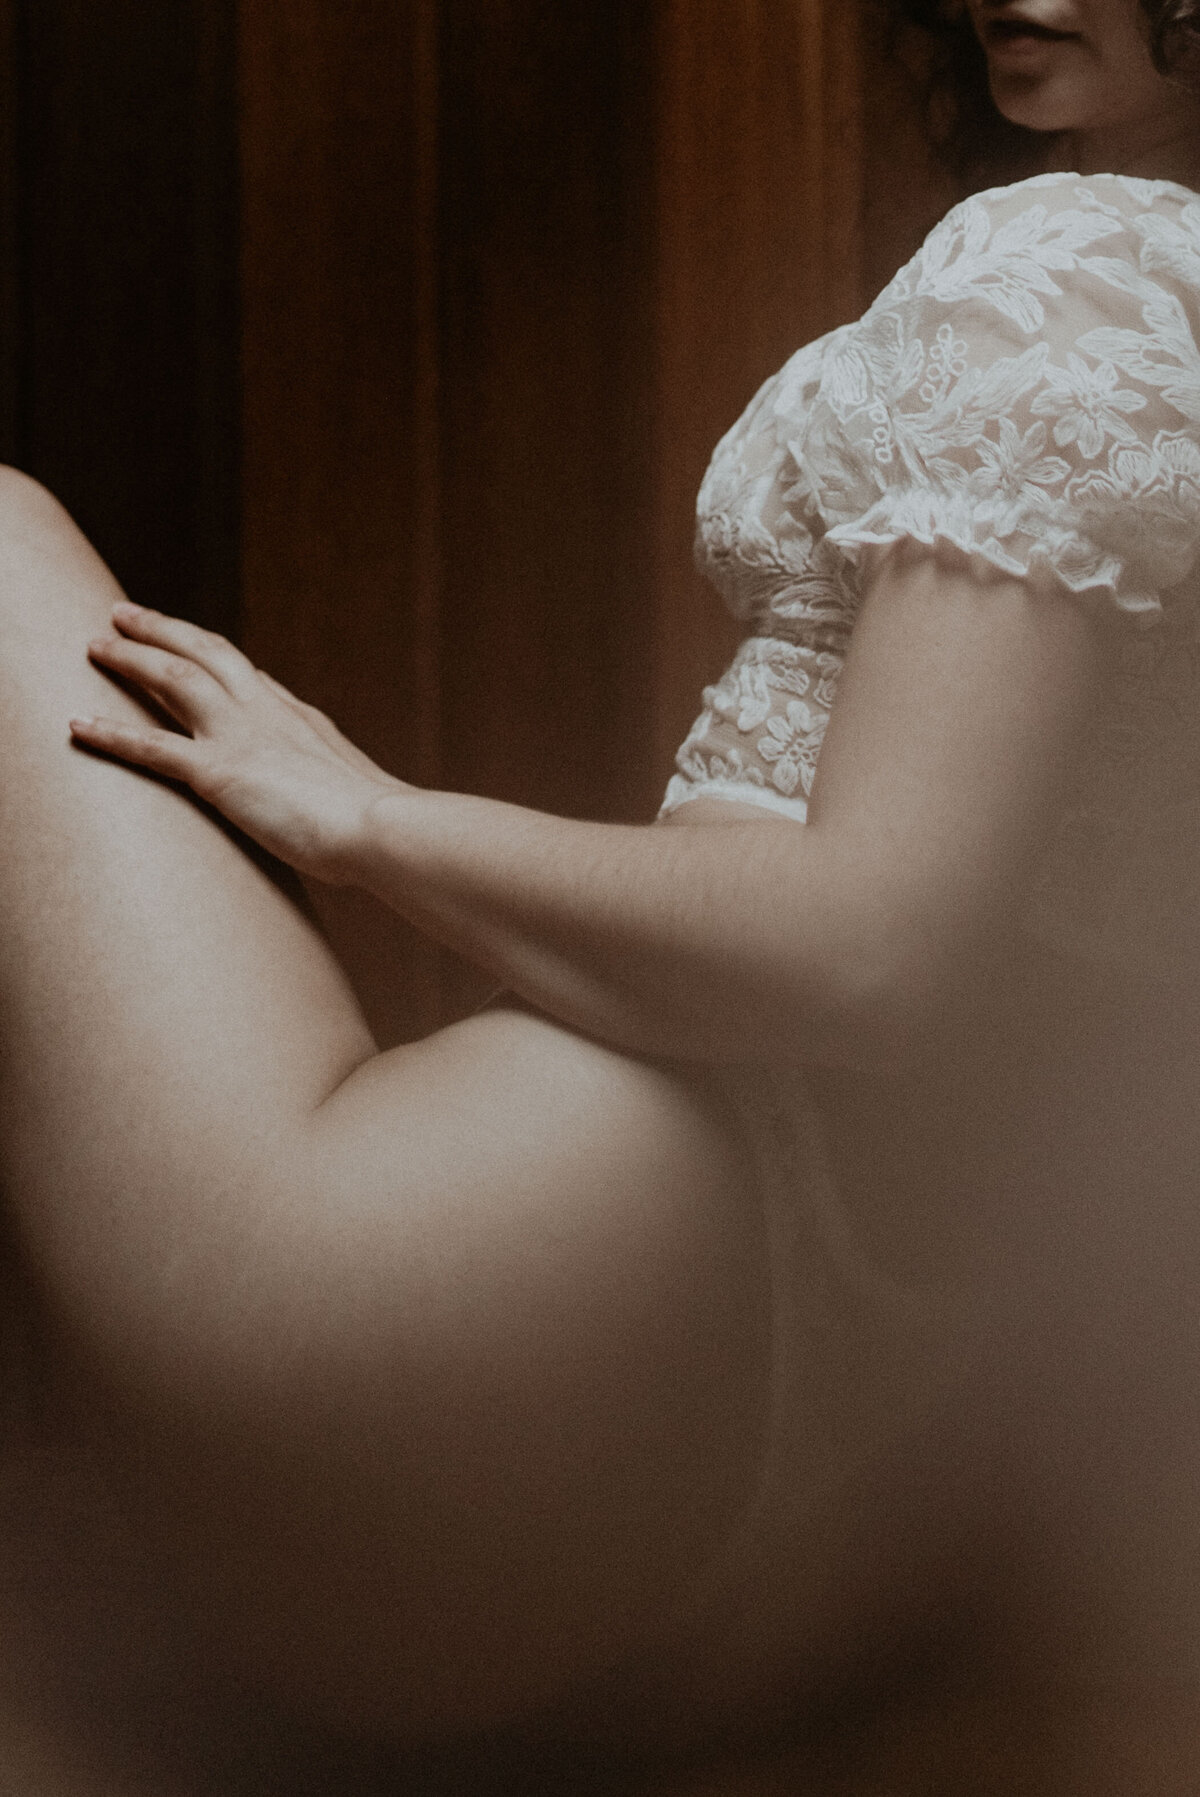 maple-ridge-boudoir-photographer-intimate-portraiture_18